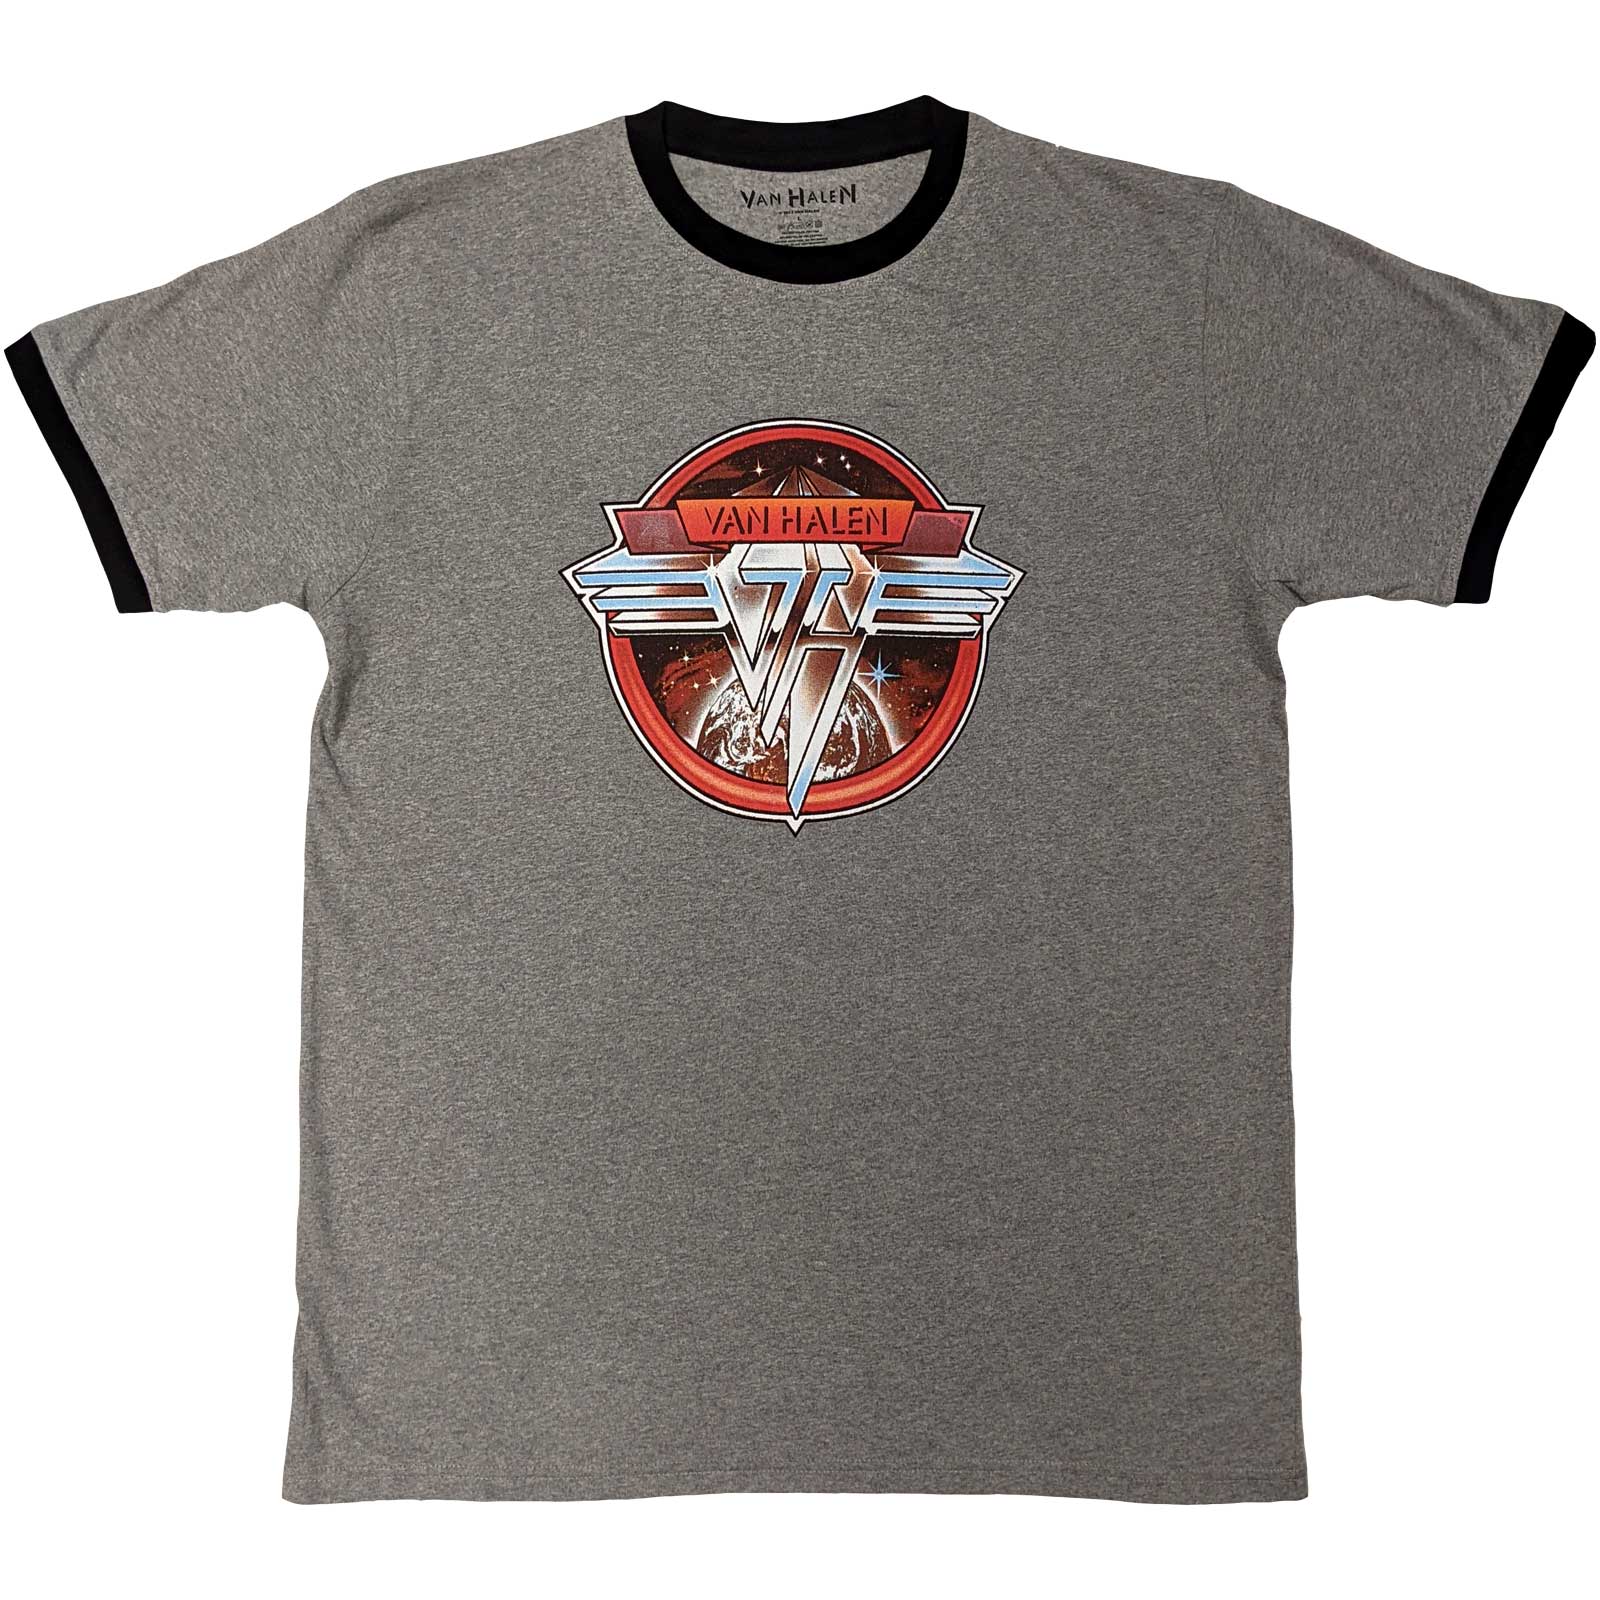 Van Halen "Circle Logo" Ringer T shirt